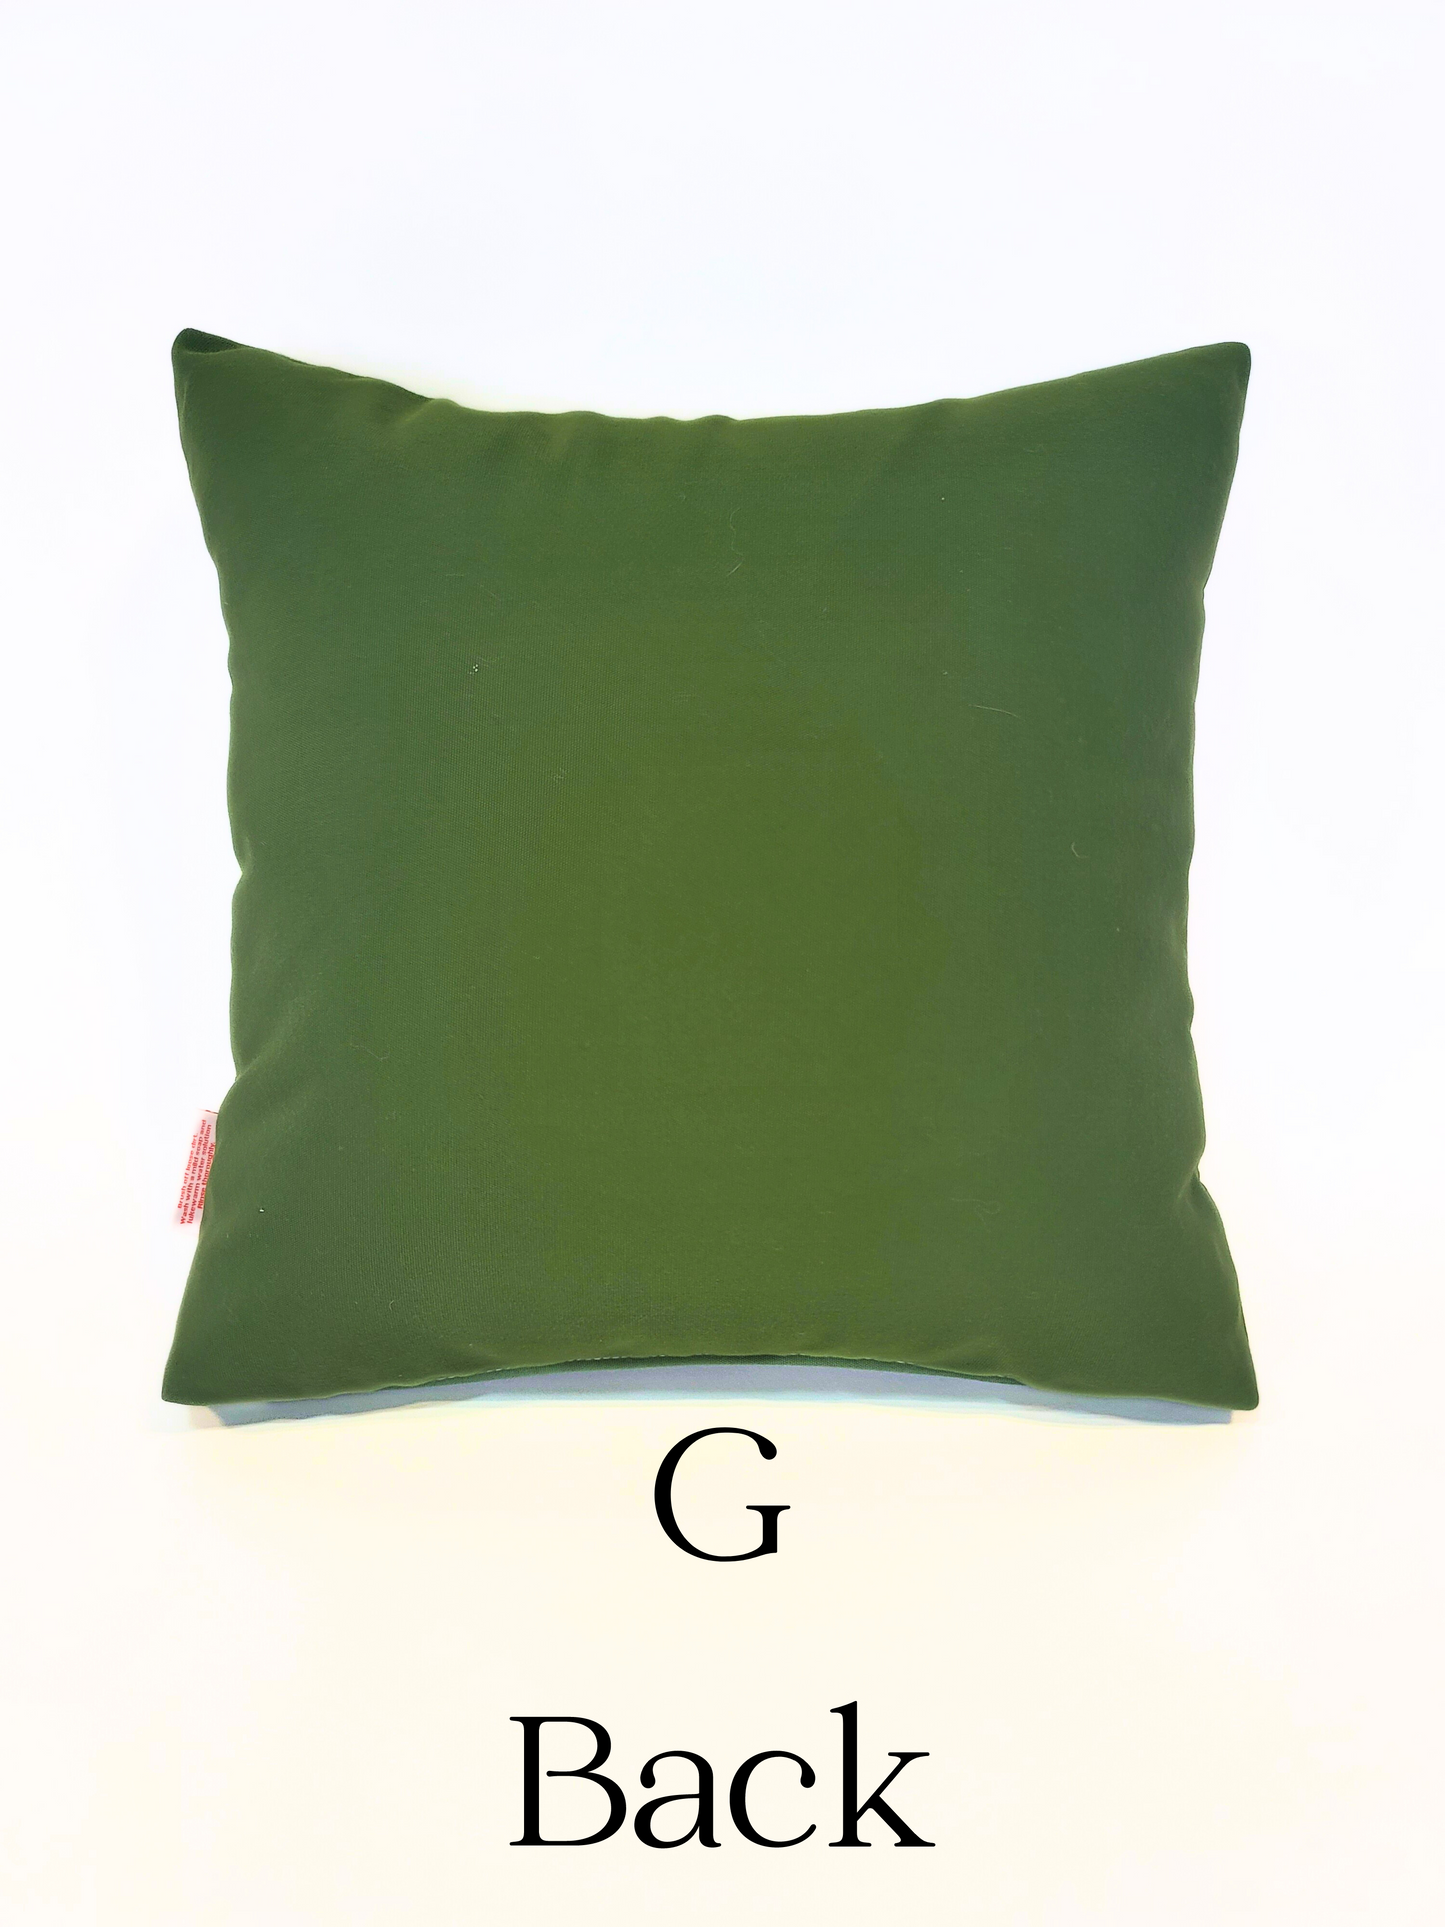 Sunbrella "Refine Cactus/Canvas Palm" Reversible Indoor/Outdoor Toss Pillow Cover